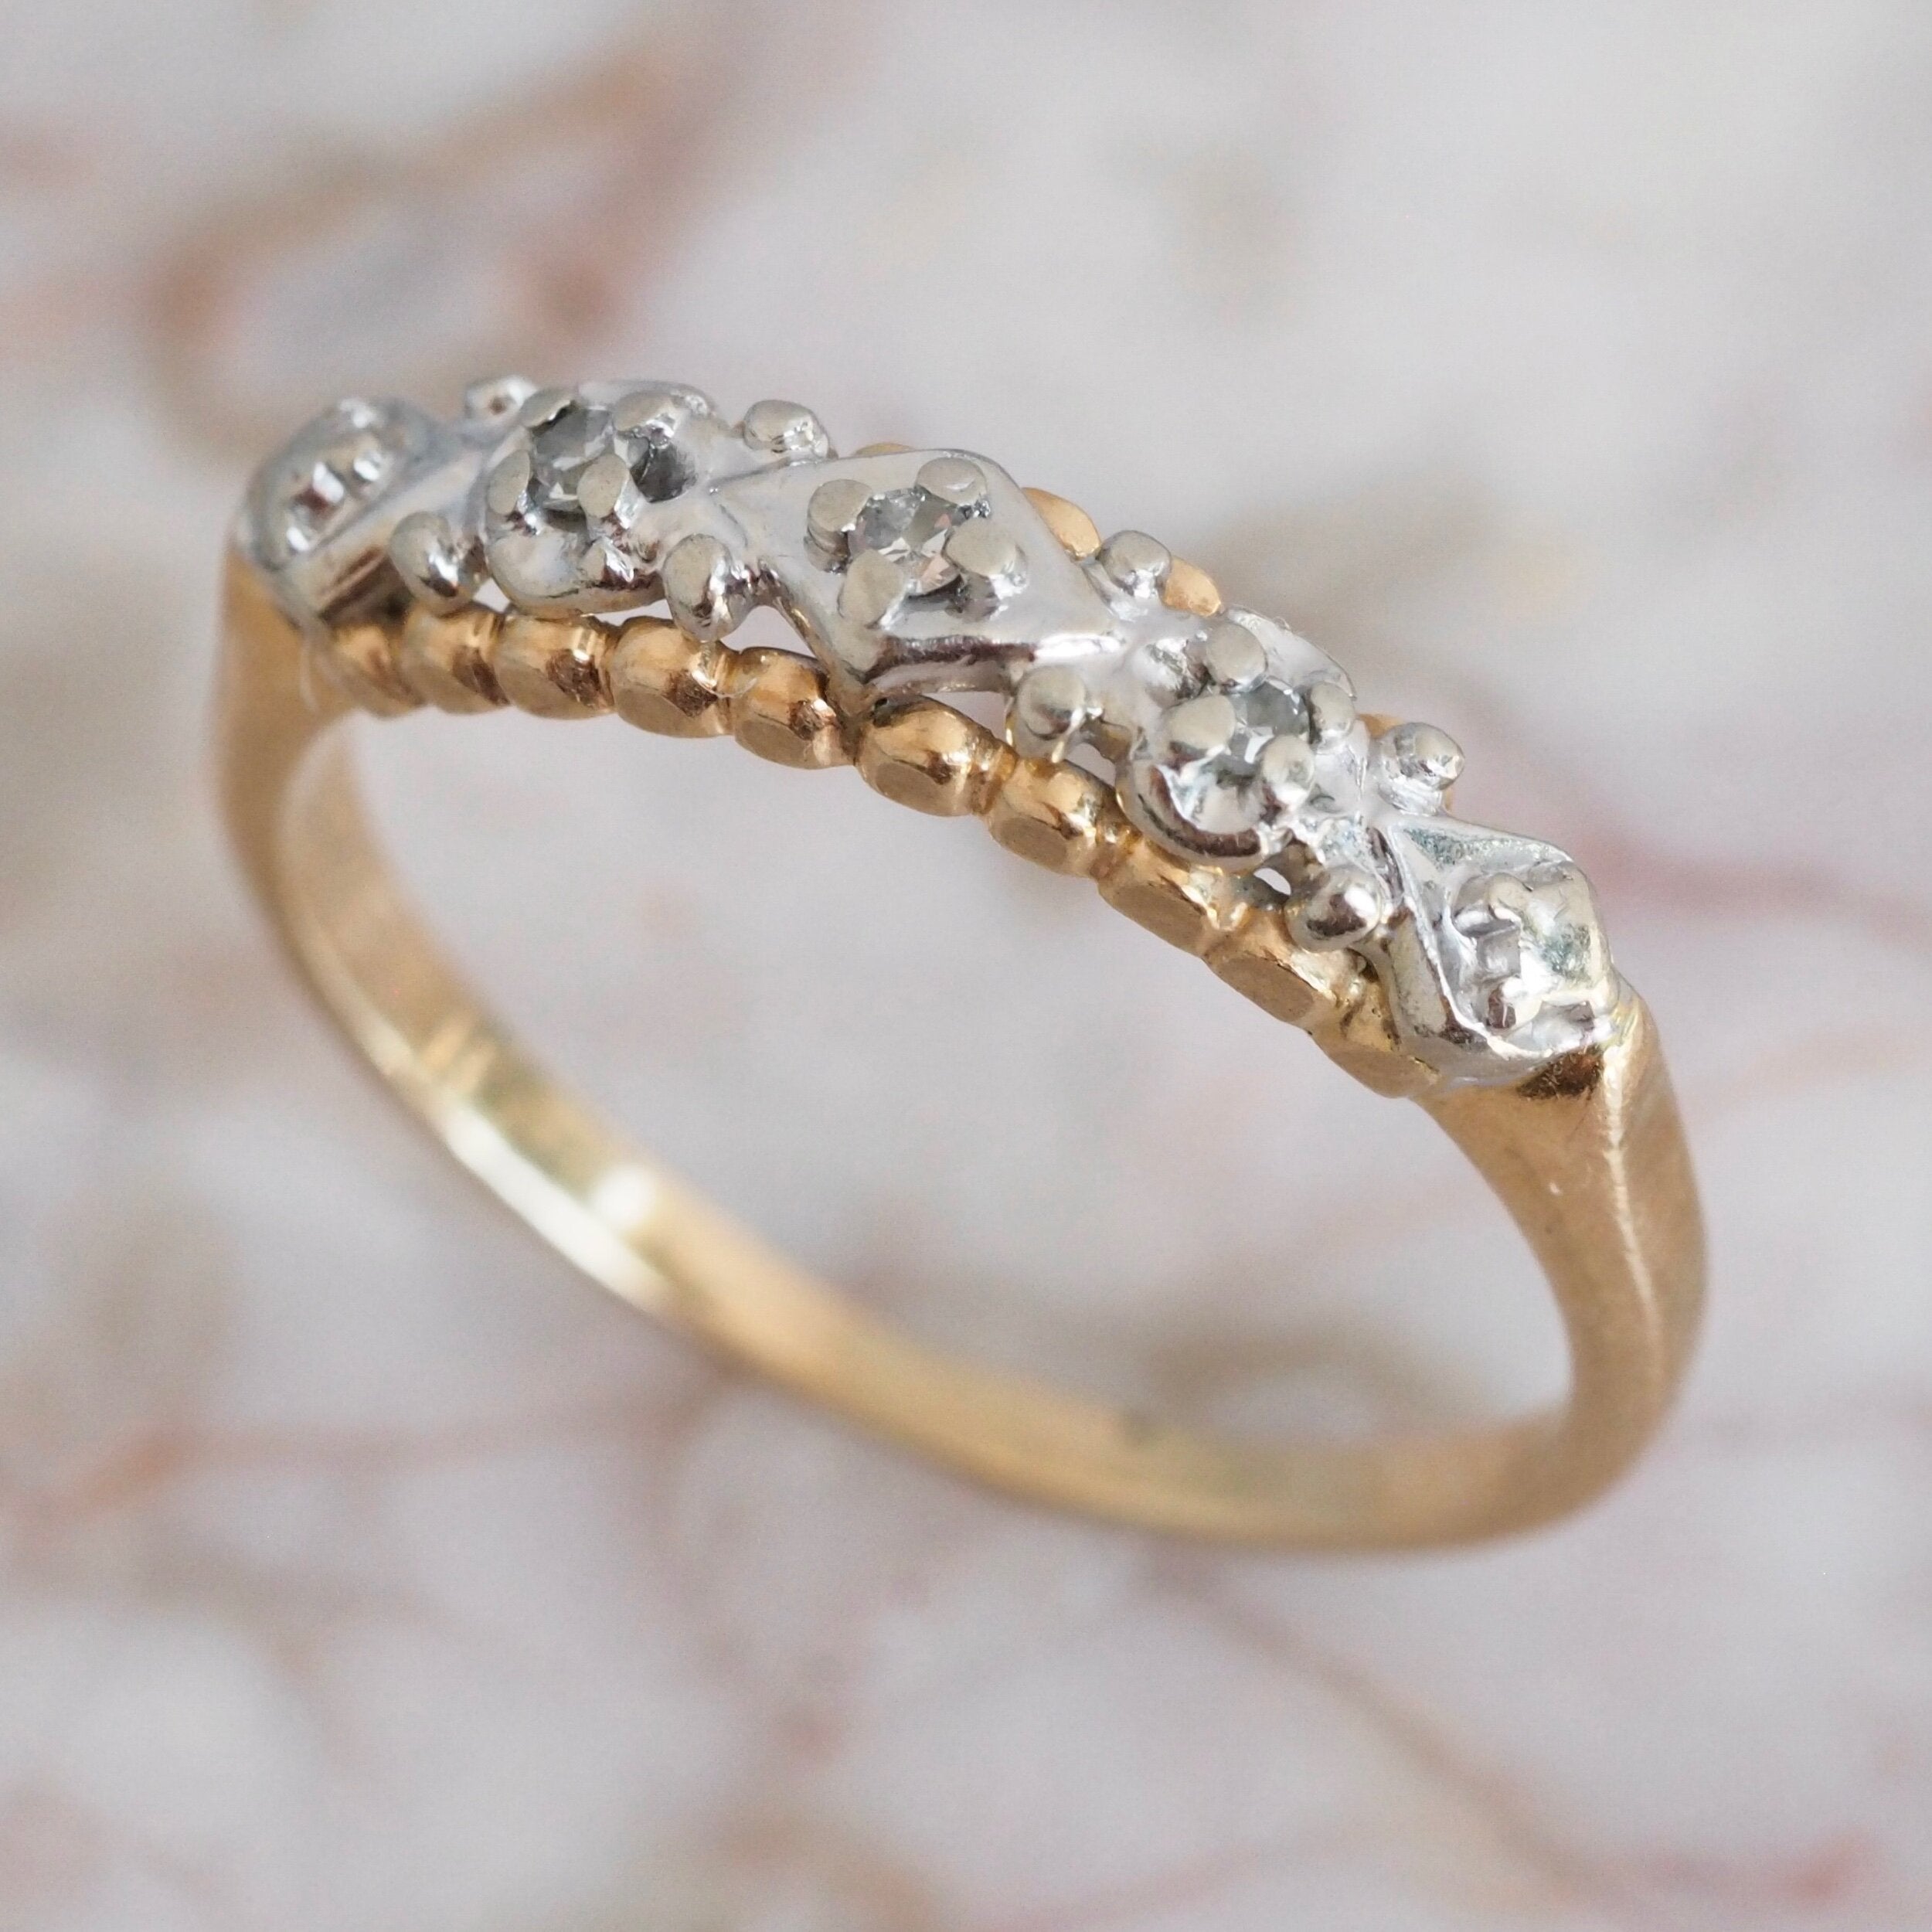 Vintage 14k White and Yellow Gold Diamond Ring